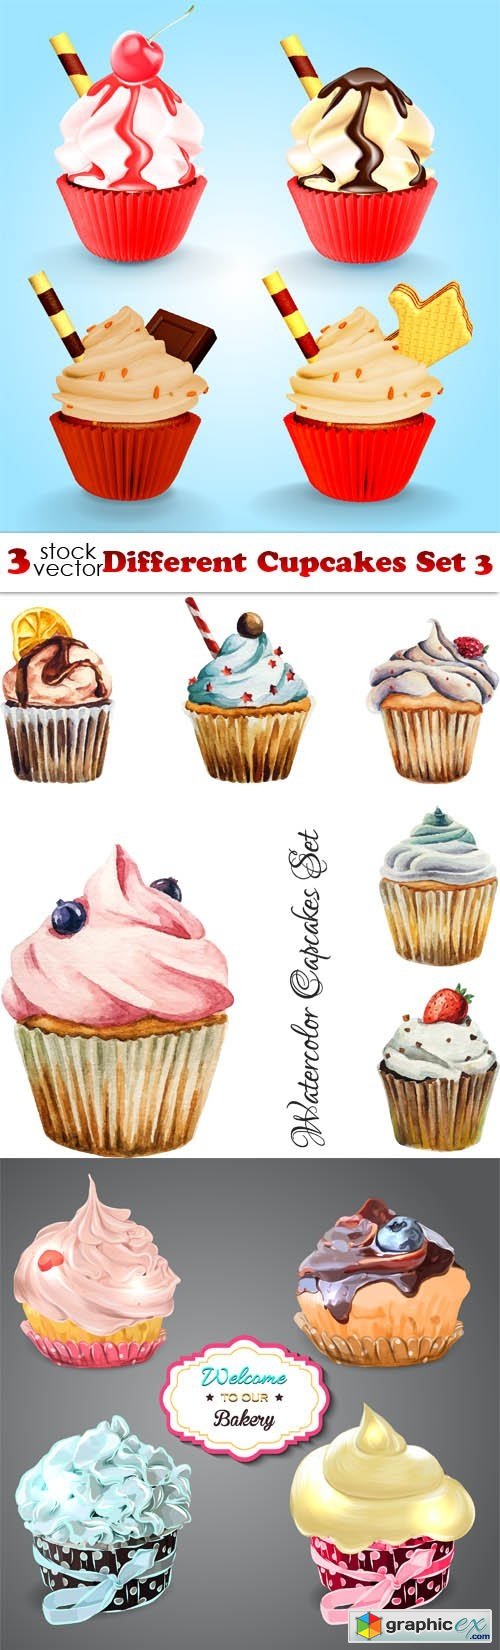 Different Cupcakes Set 3